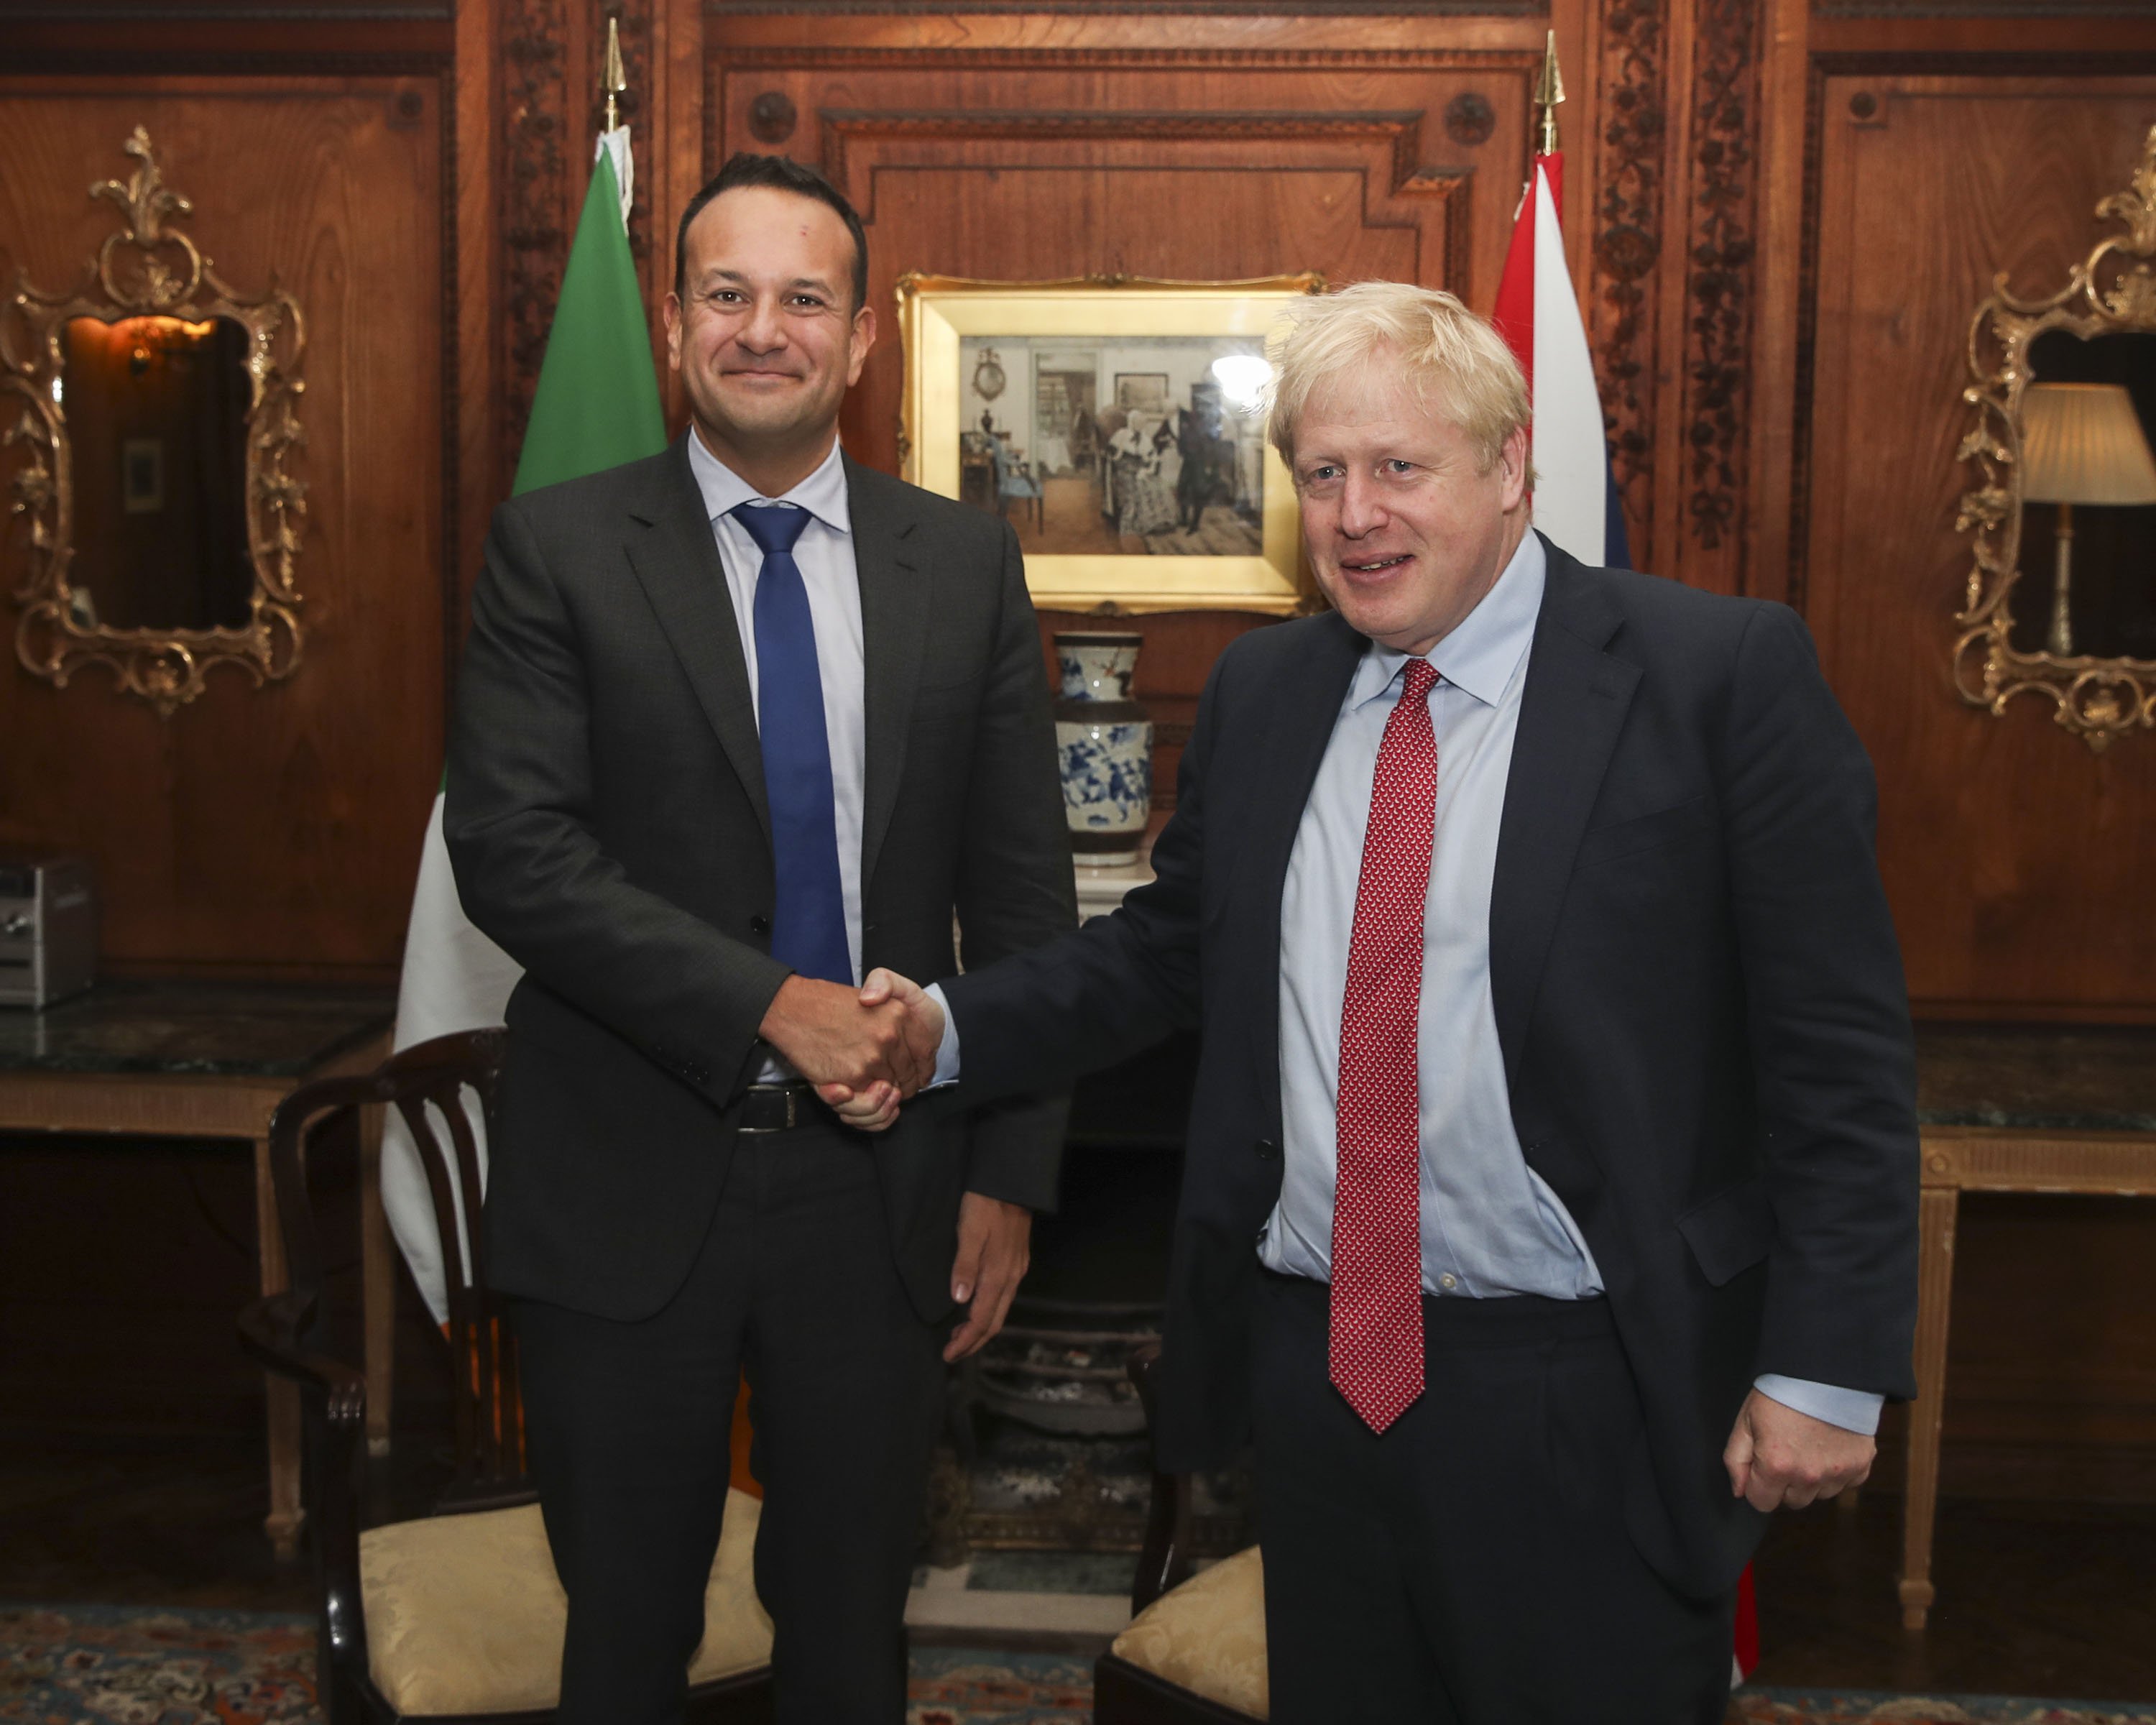 Prime Minister Boris Johnson and Taoiseach Leo Varadkar meeting in October 2019